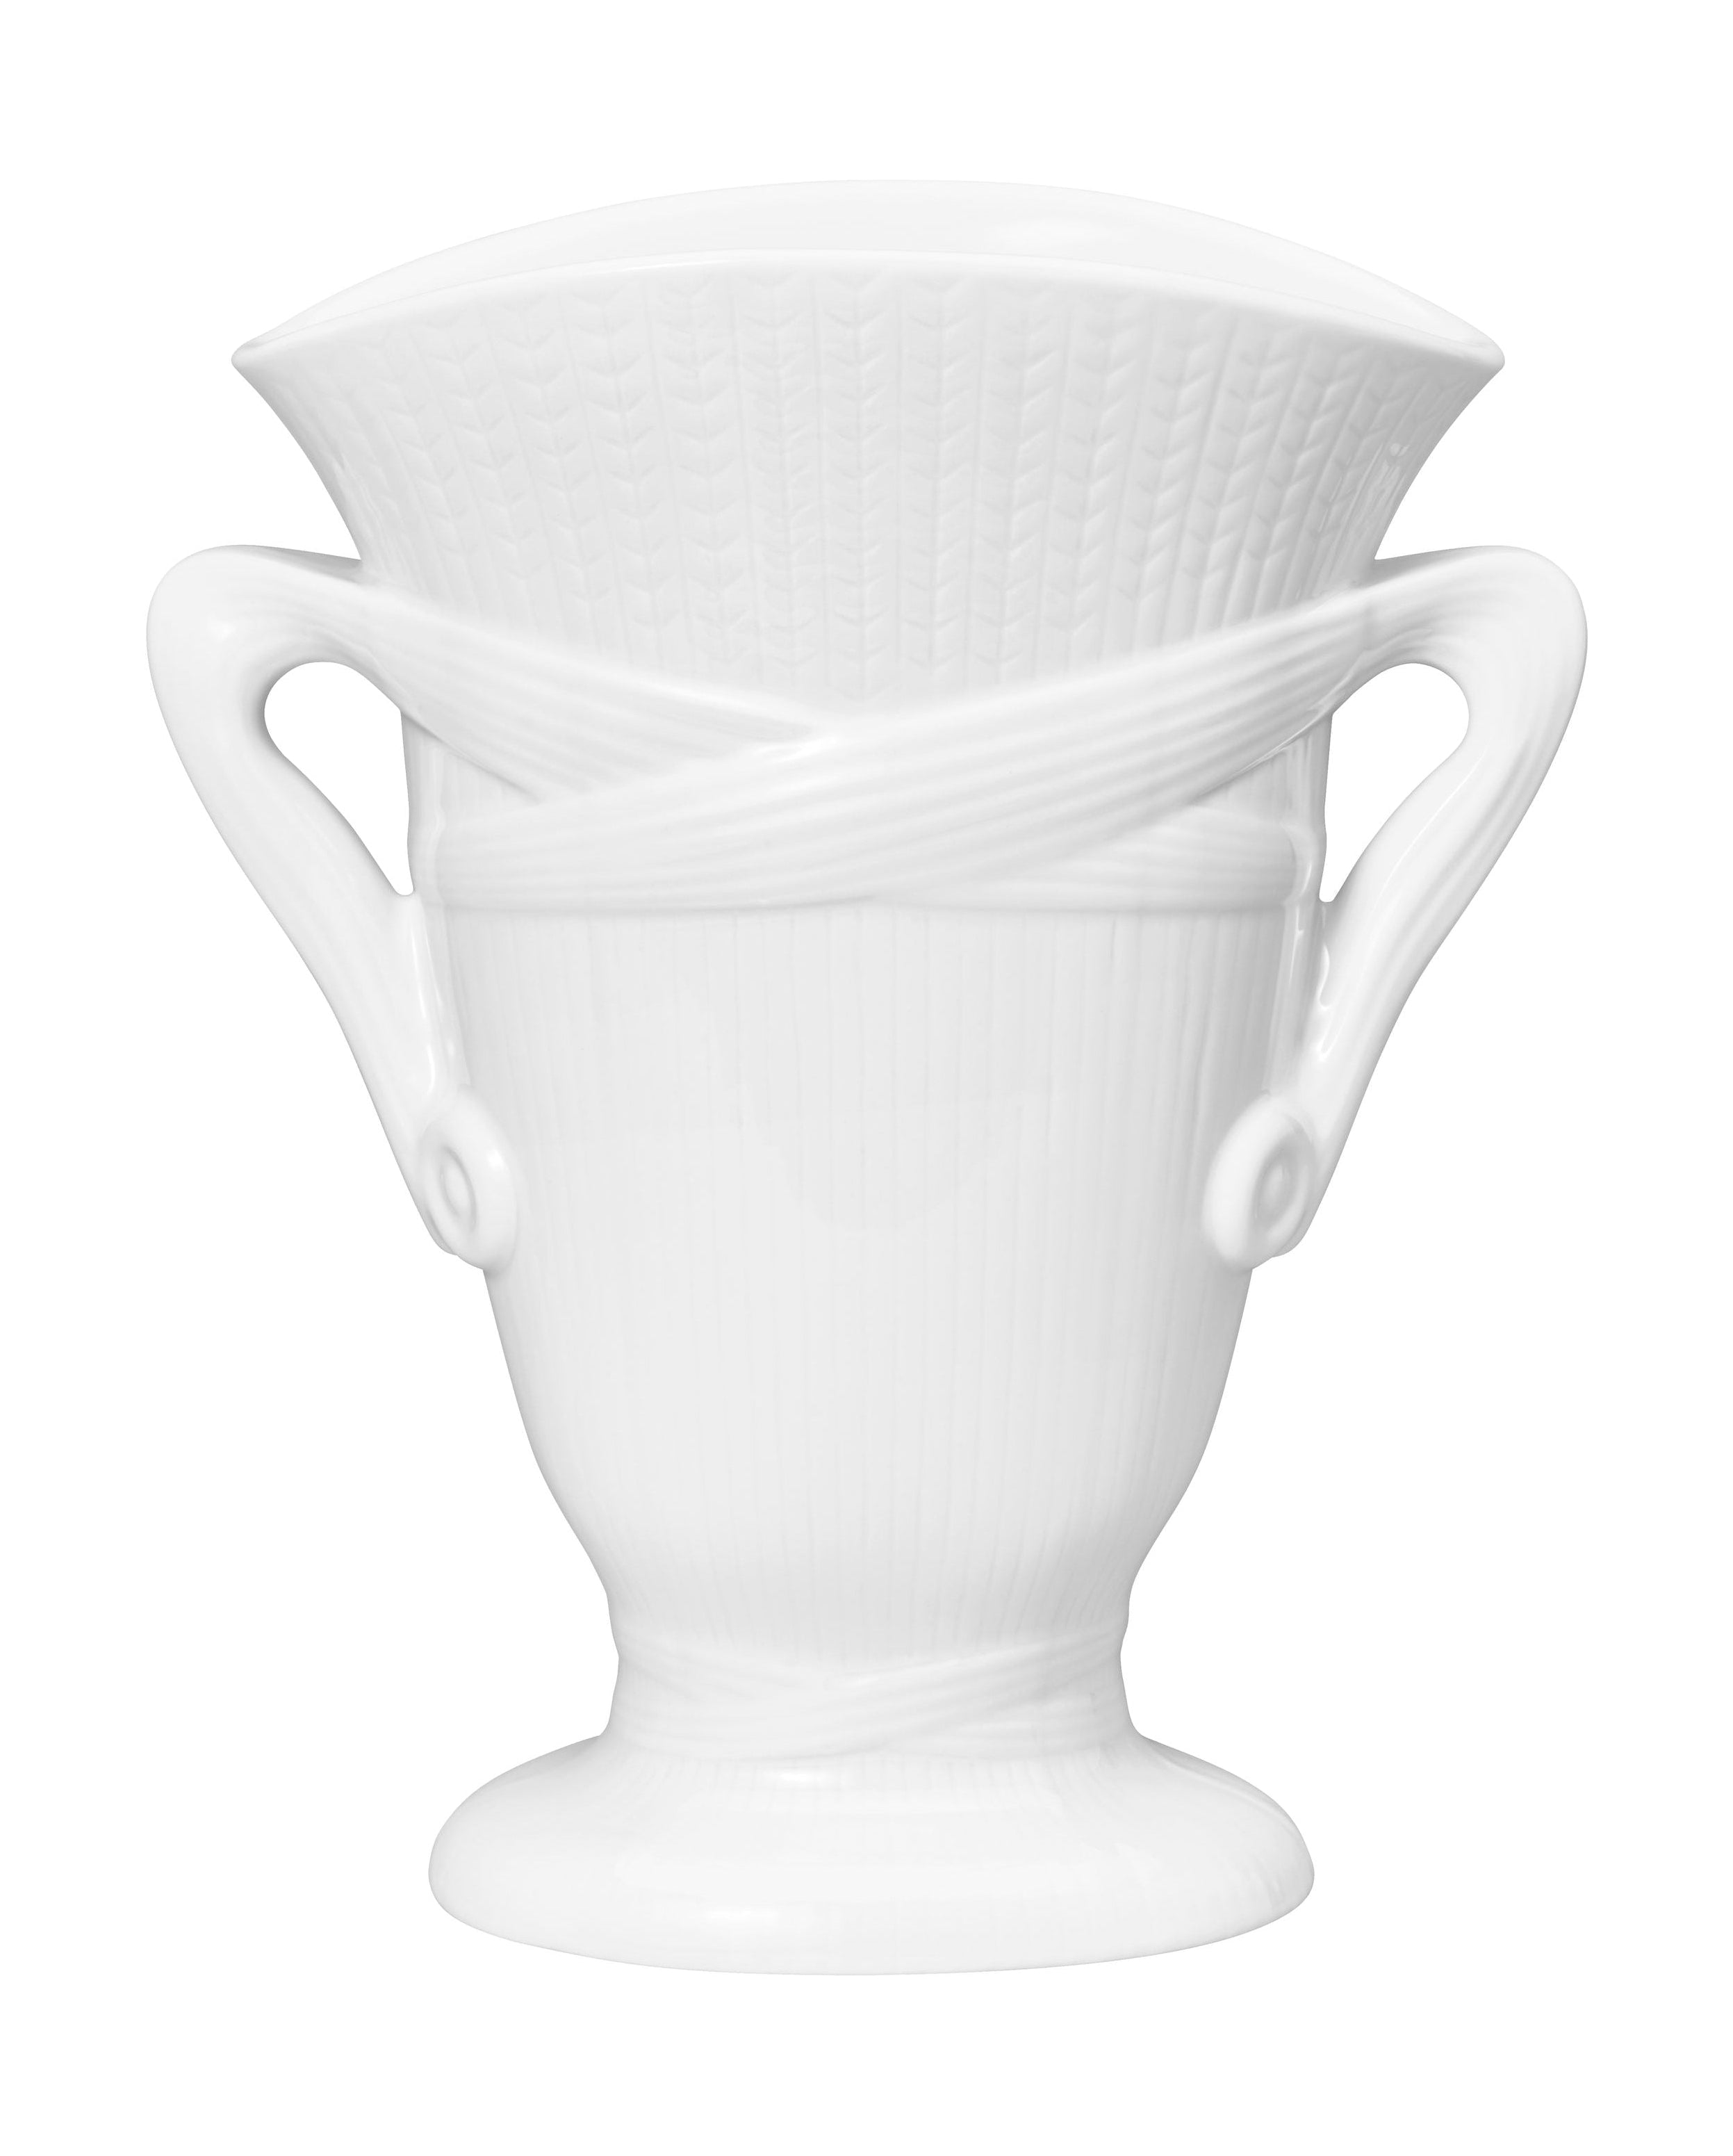 Rörstrand Grace suédoise Vase, 26 cm